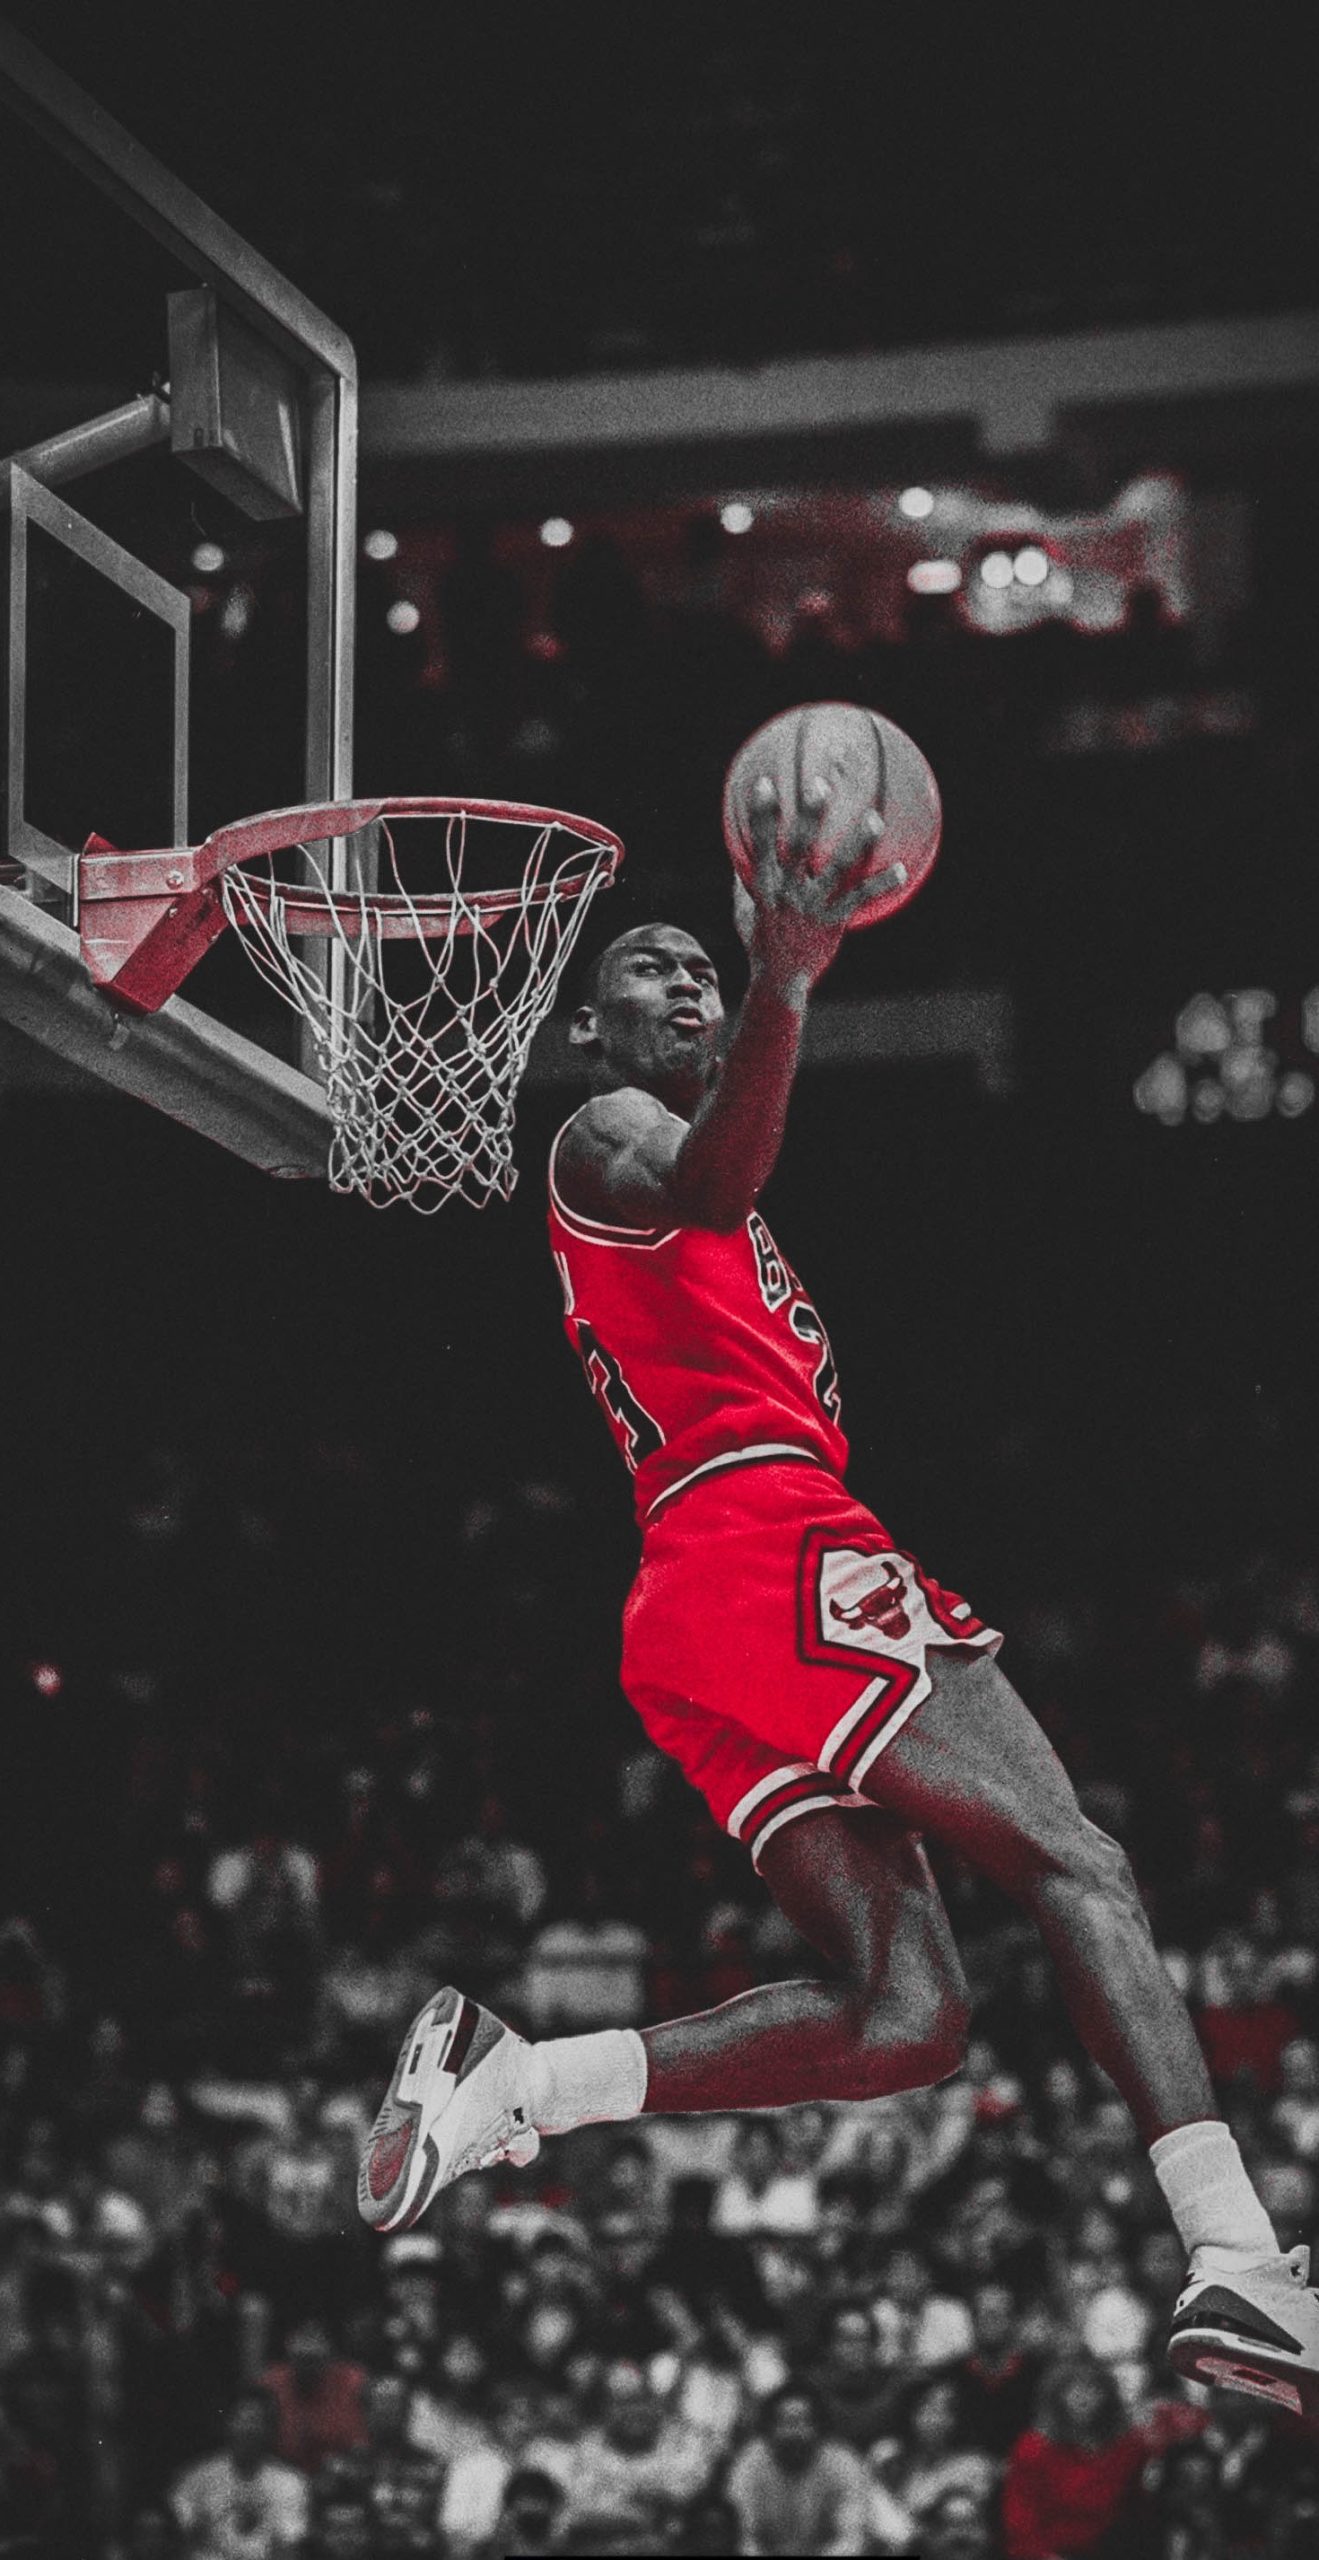 correcto Desarmado cangrejo Michael Jordan Wallpapers: Top 38 Best Michael Jordan Wallpapers [ HQ ]